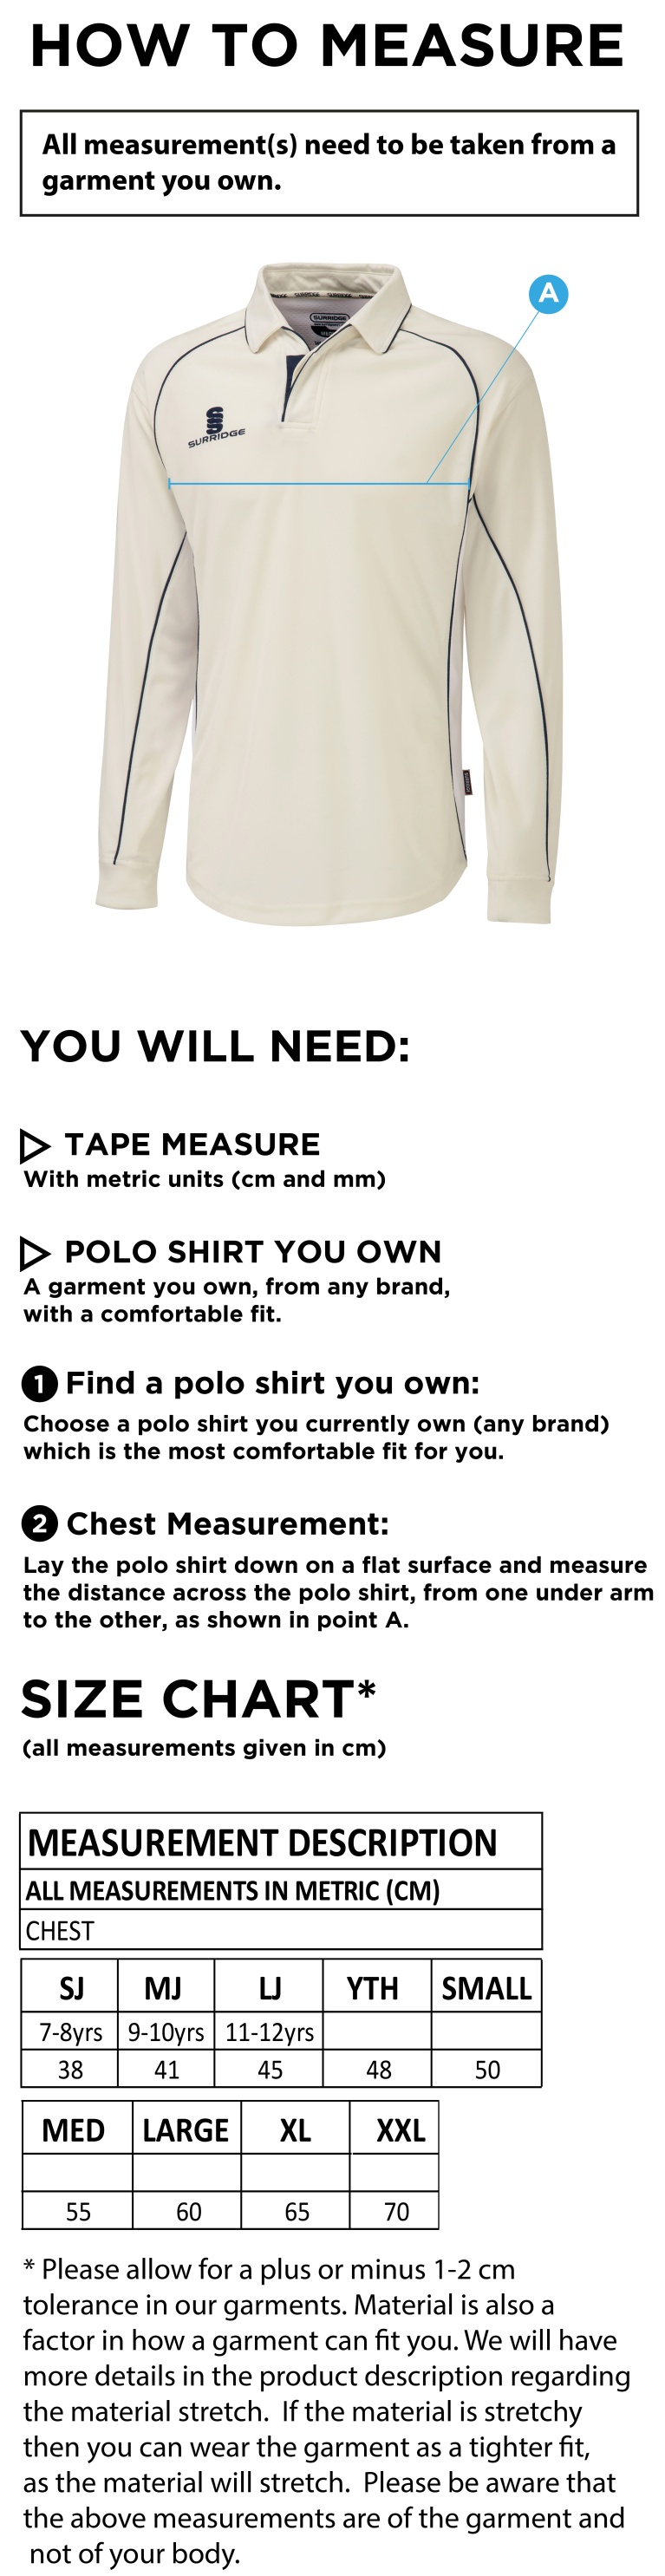 Nailsea CC - Premier Long Sleeve Shirt - Size Guide